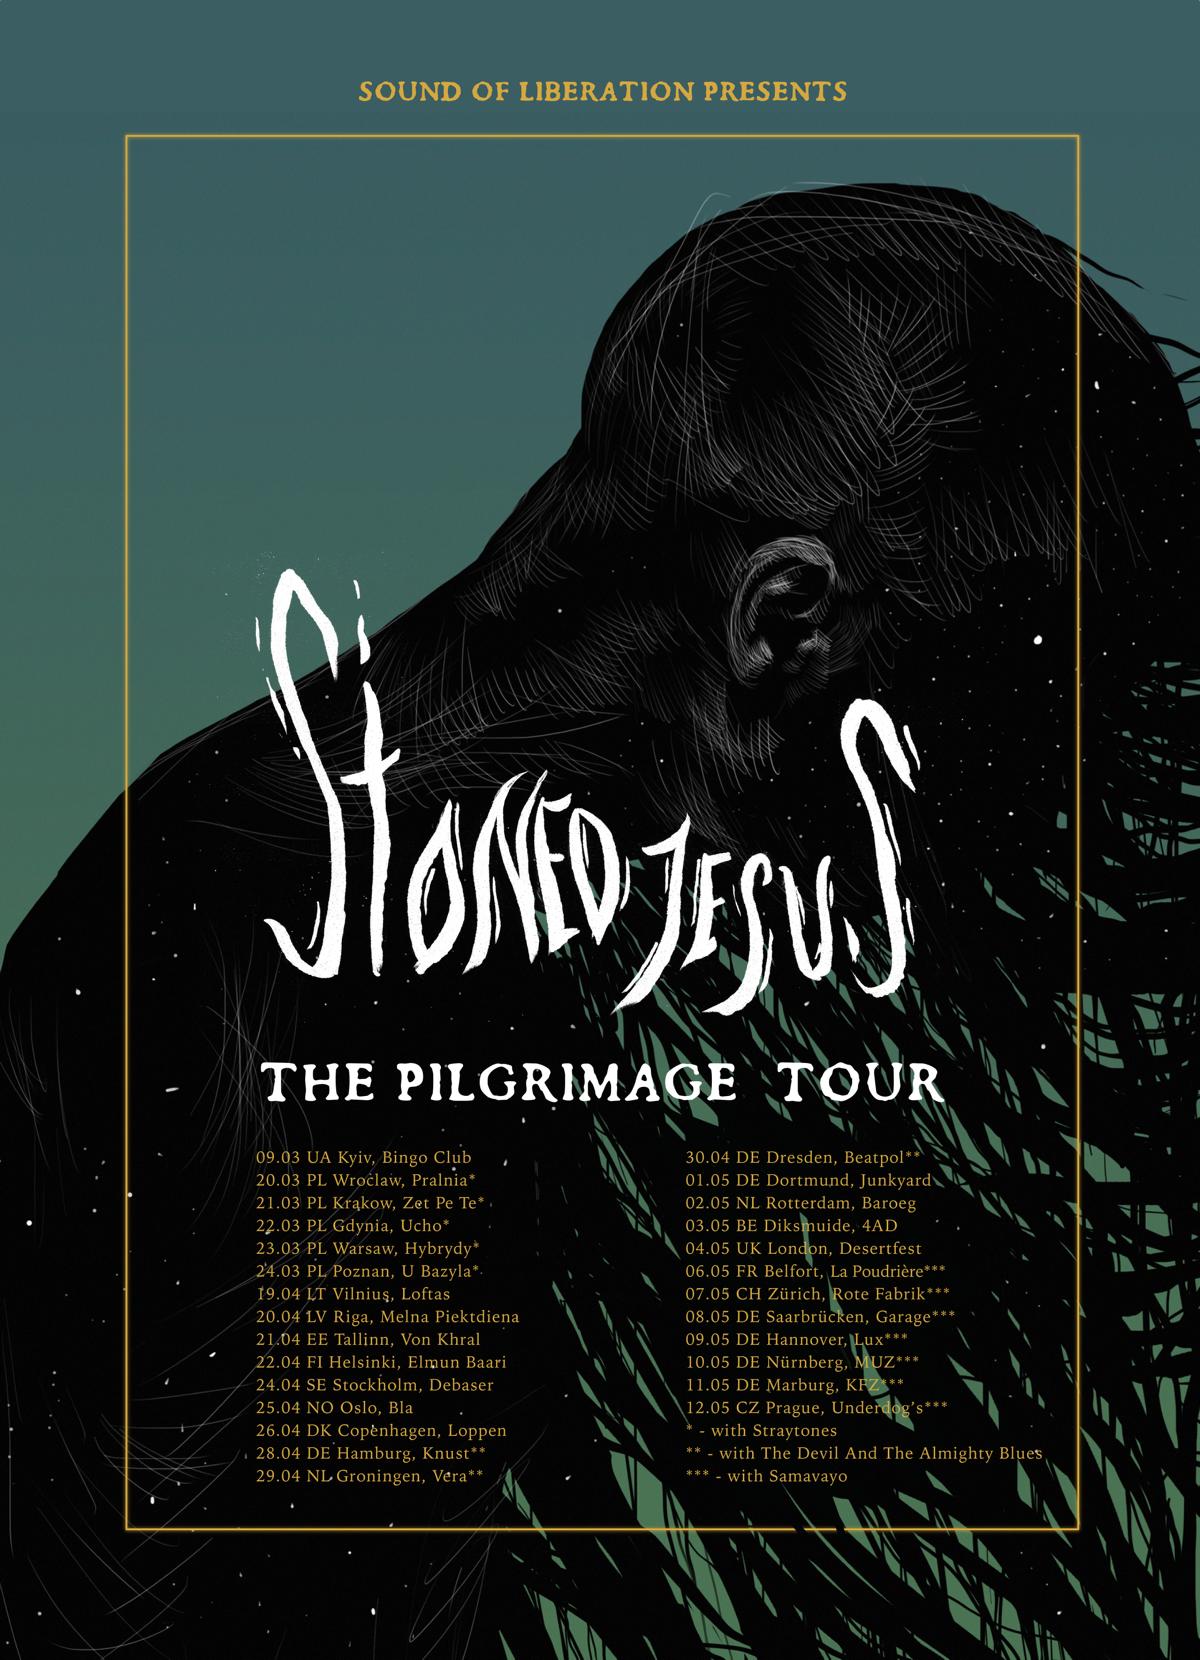 Tourplakat von Stoned Jesus auf The Pilgrimage Tour 2019